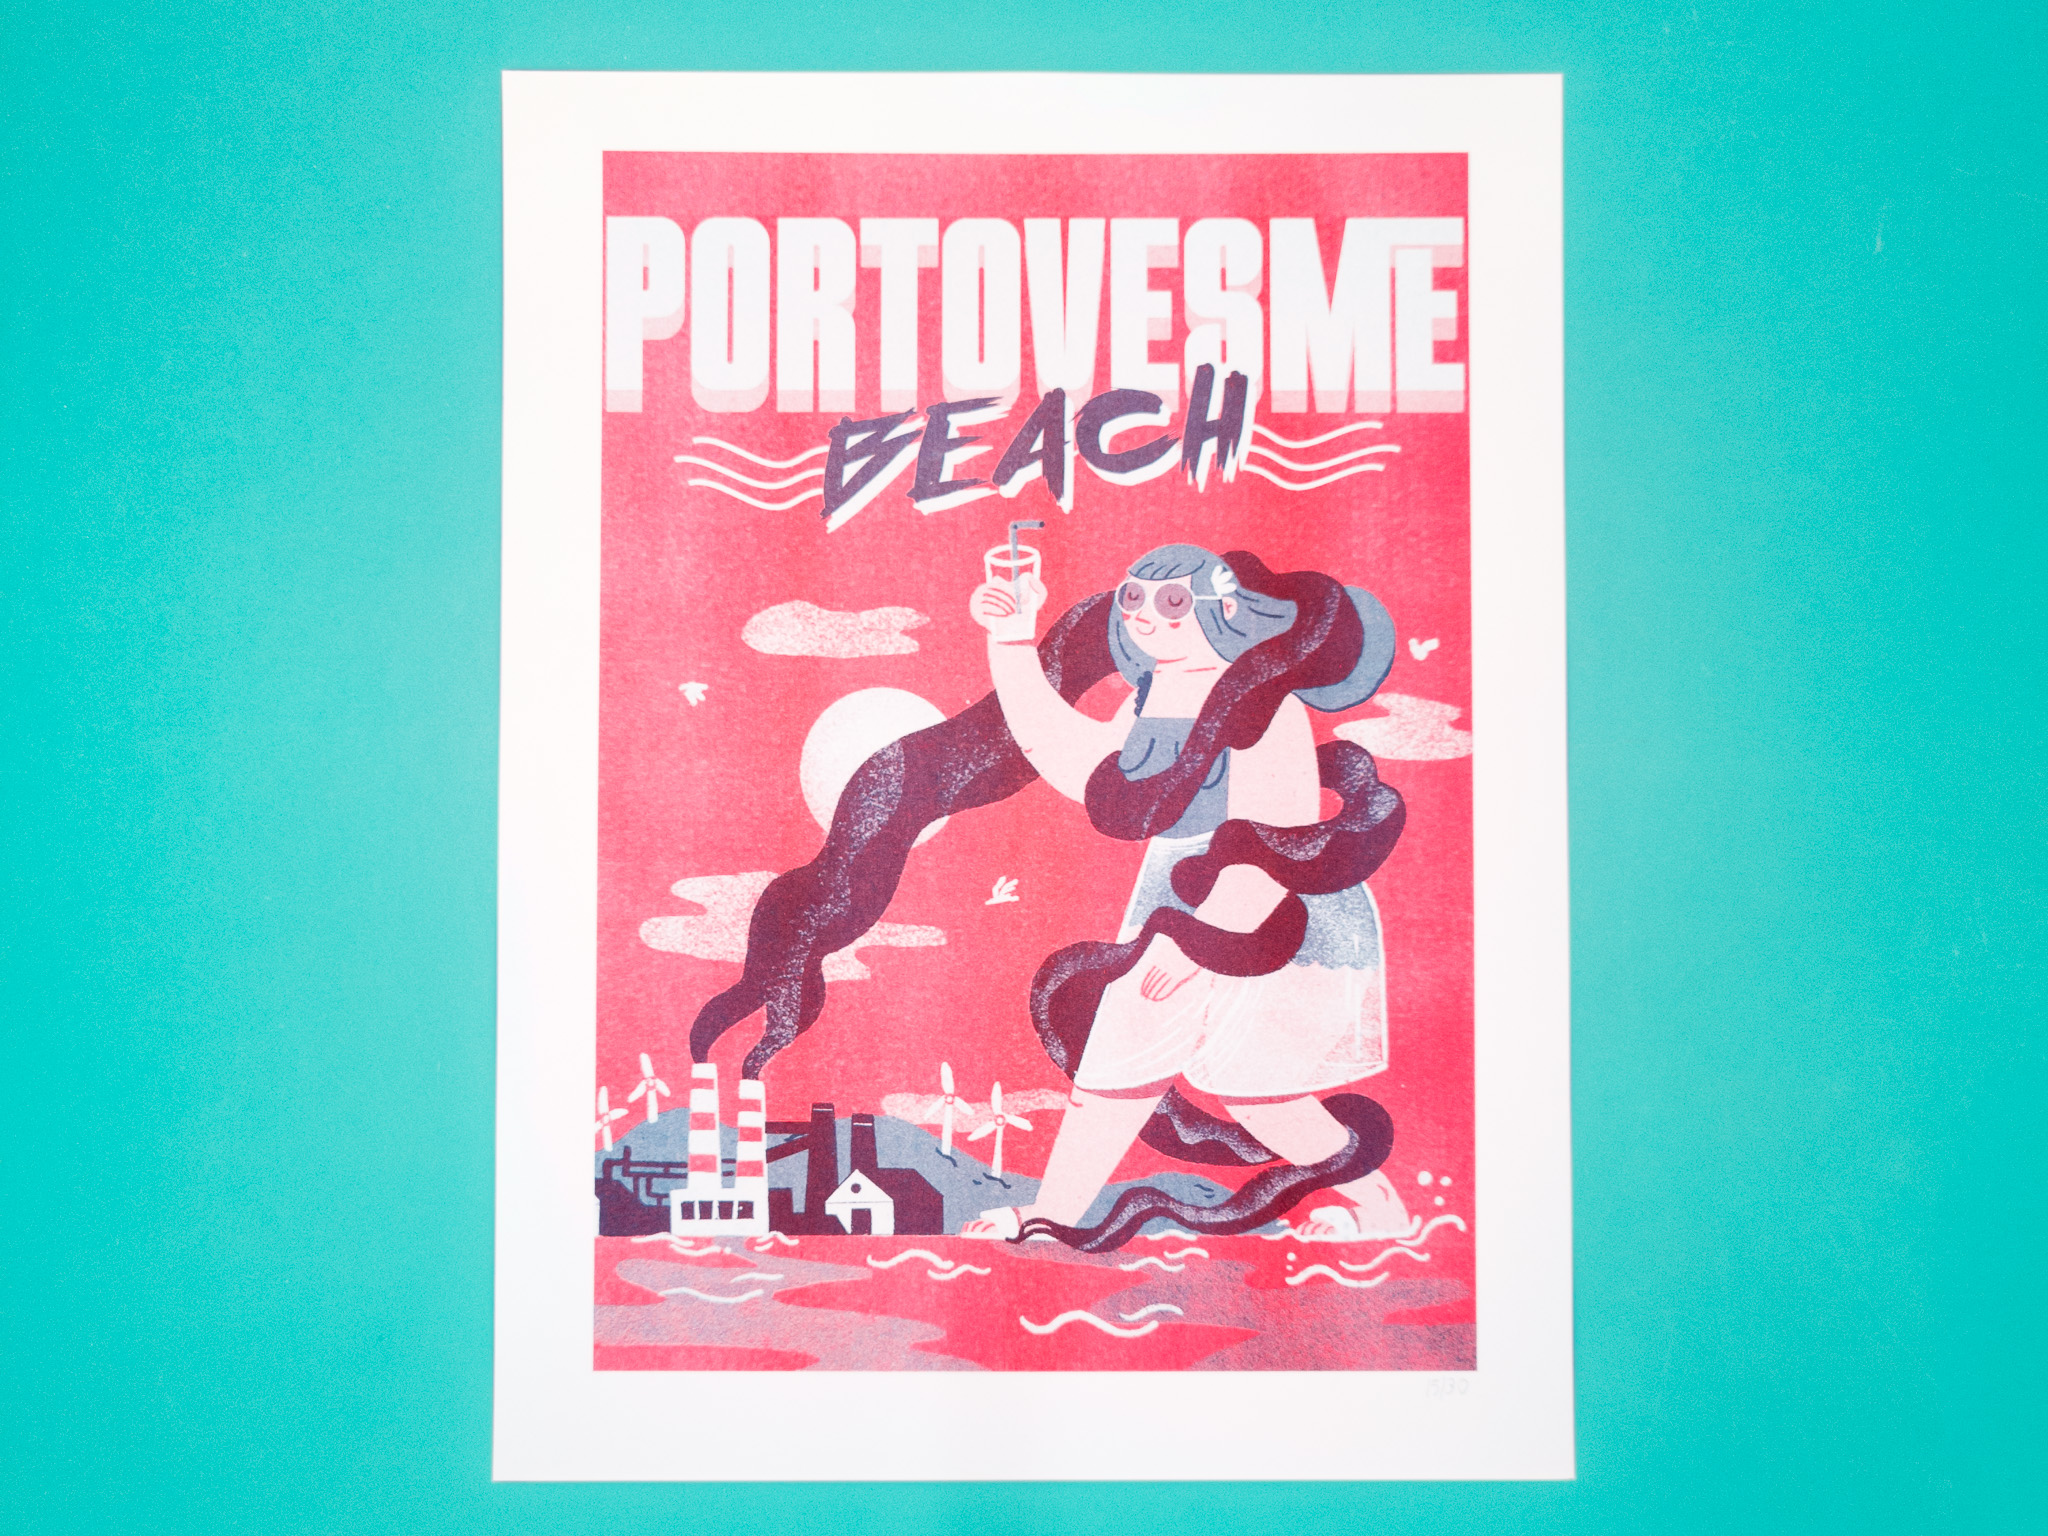 poster-marinetti-portovesme-beach-risograph.jpg